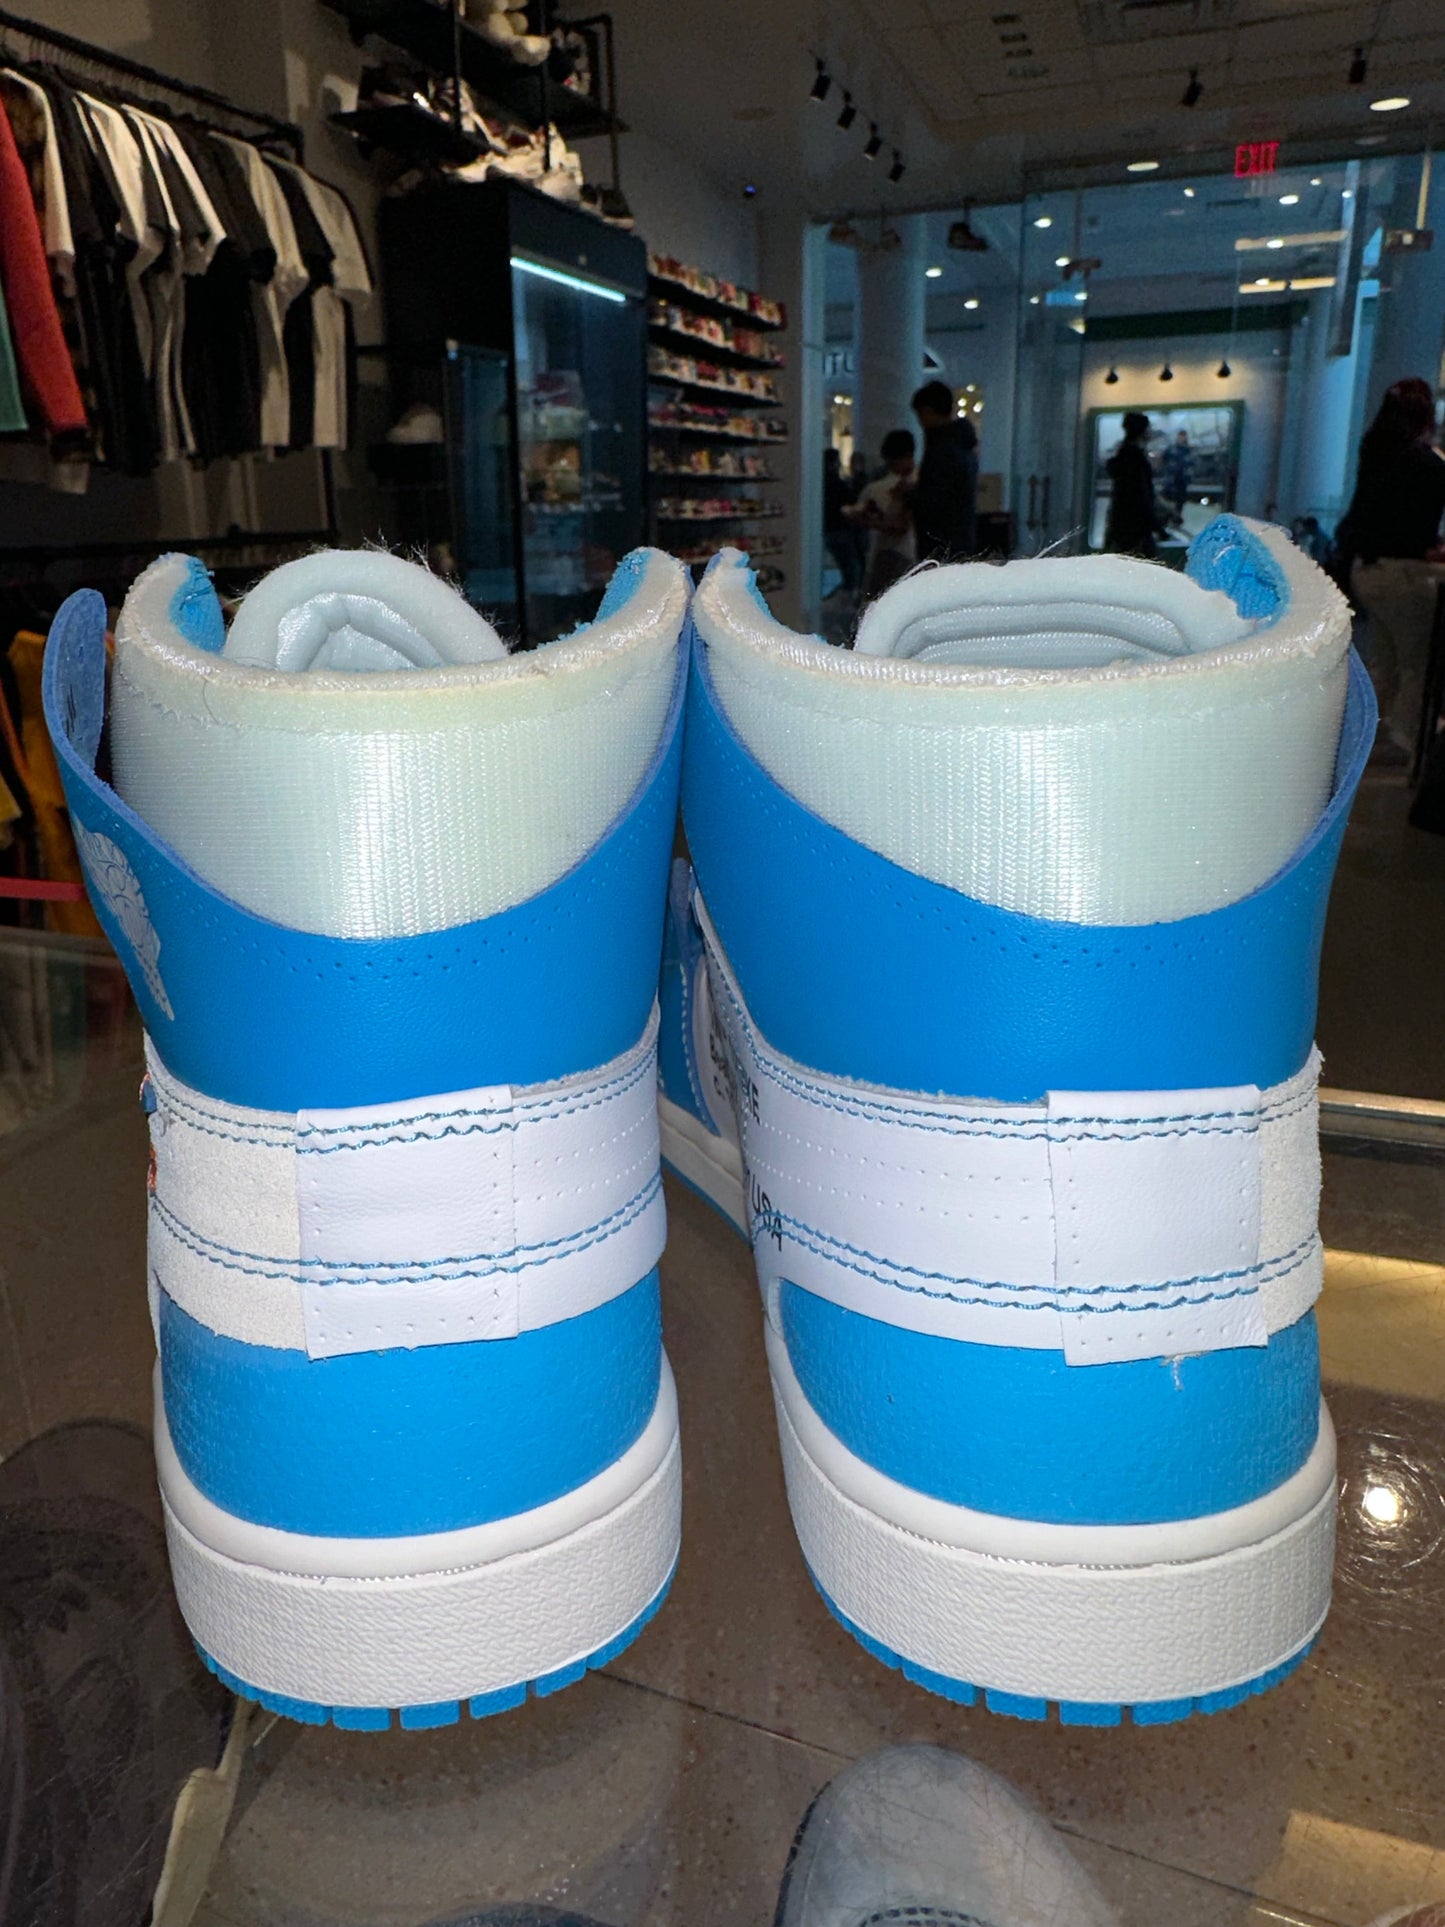 Size 8.5 Air Jordan 1 Off-White “University Blue” Brand New (Mall)